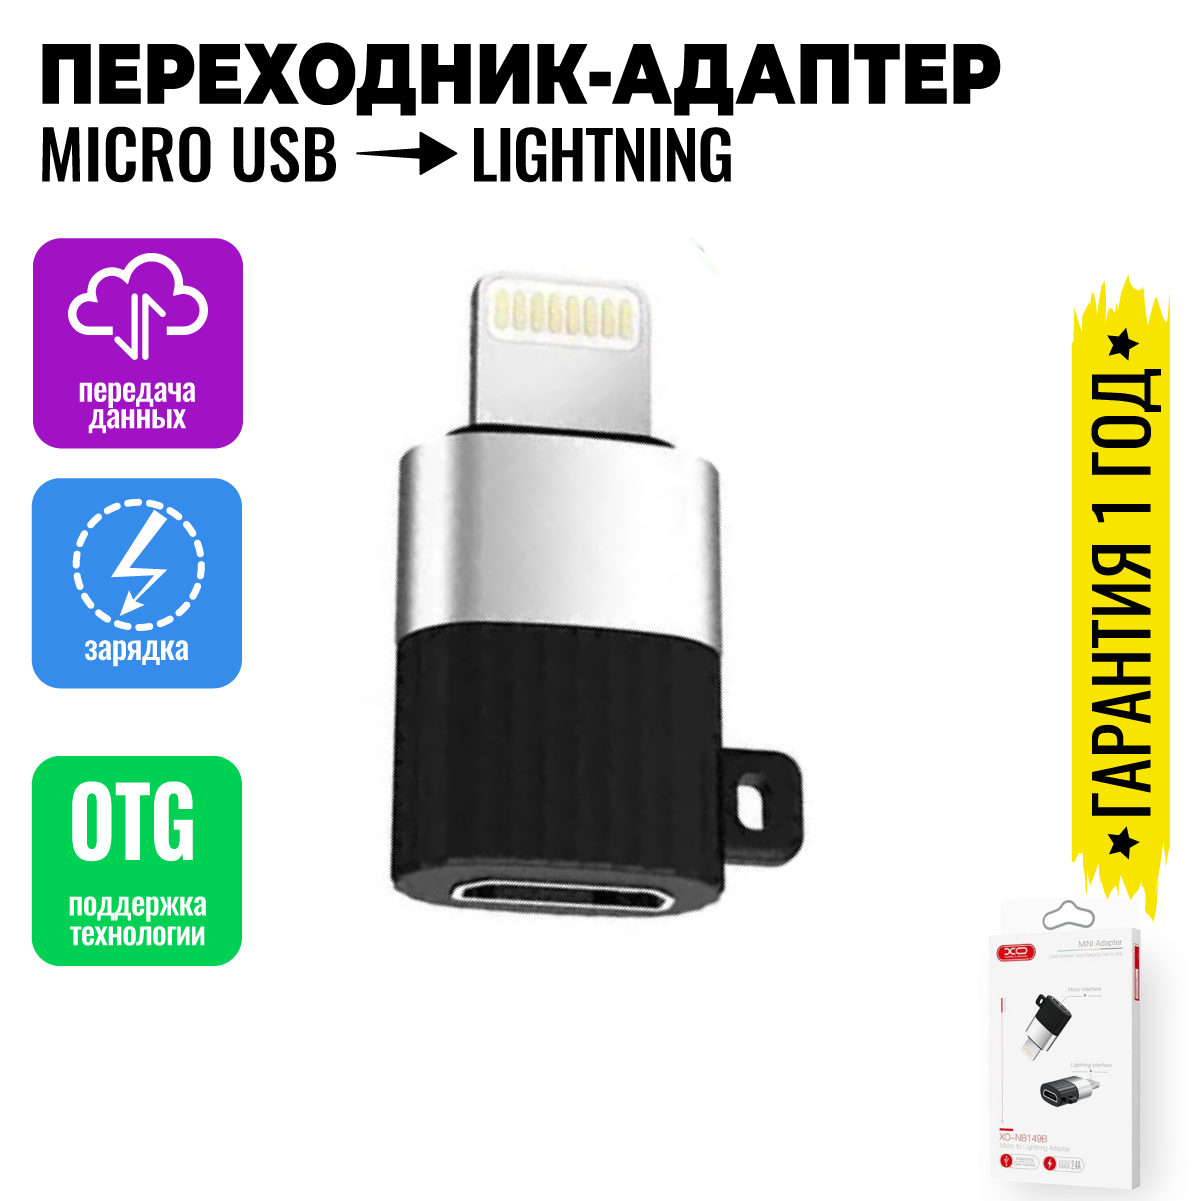 Адаптер переходник с Lightning на Micro USB OTG